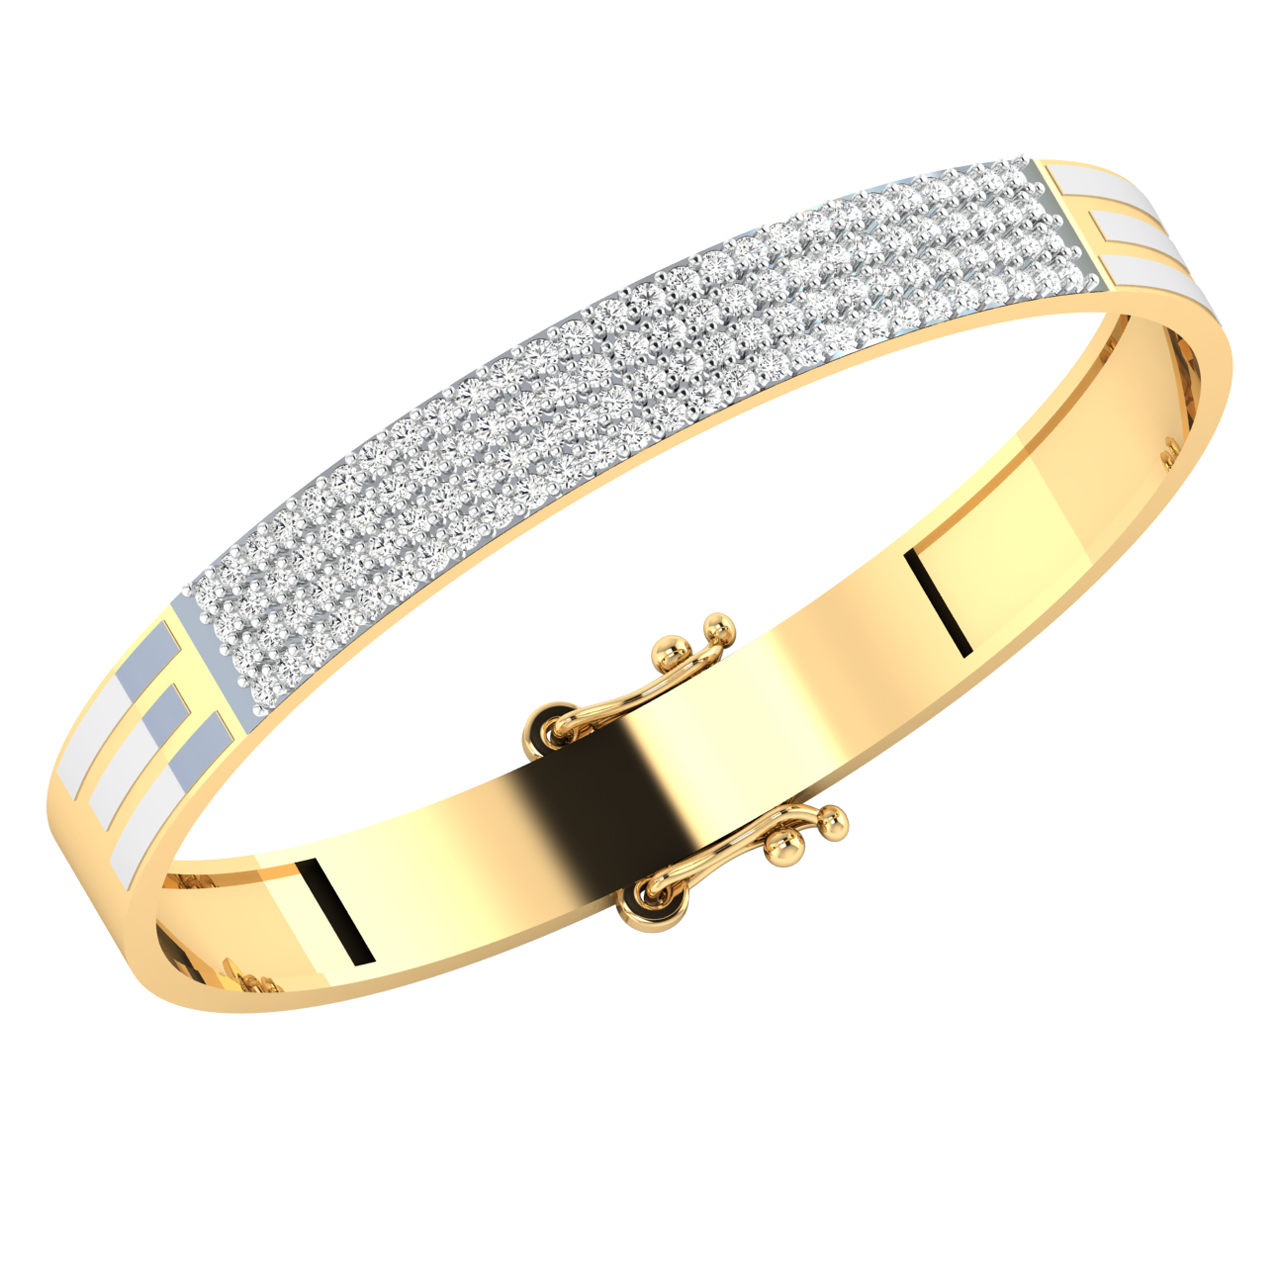 Diamond Bracelet Designs|Latest Diamond Bracelet Design for Women|Diamond  Bracelet - YouTube